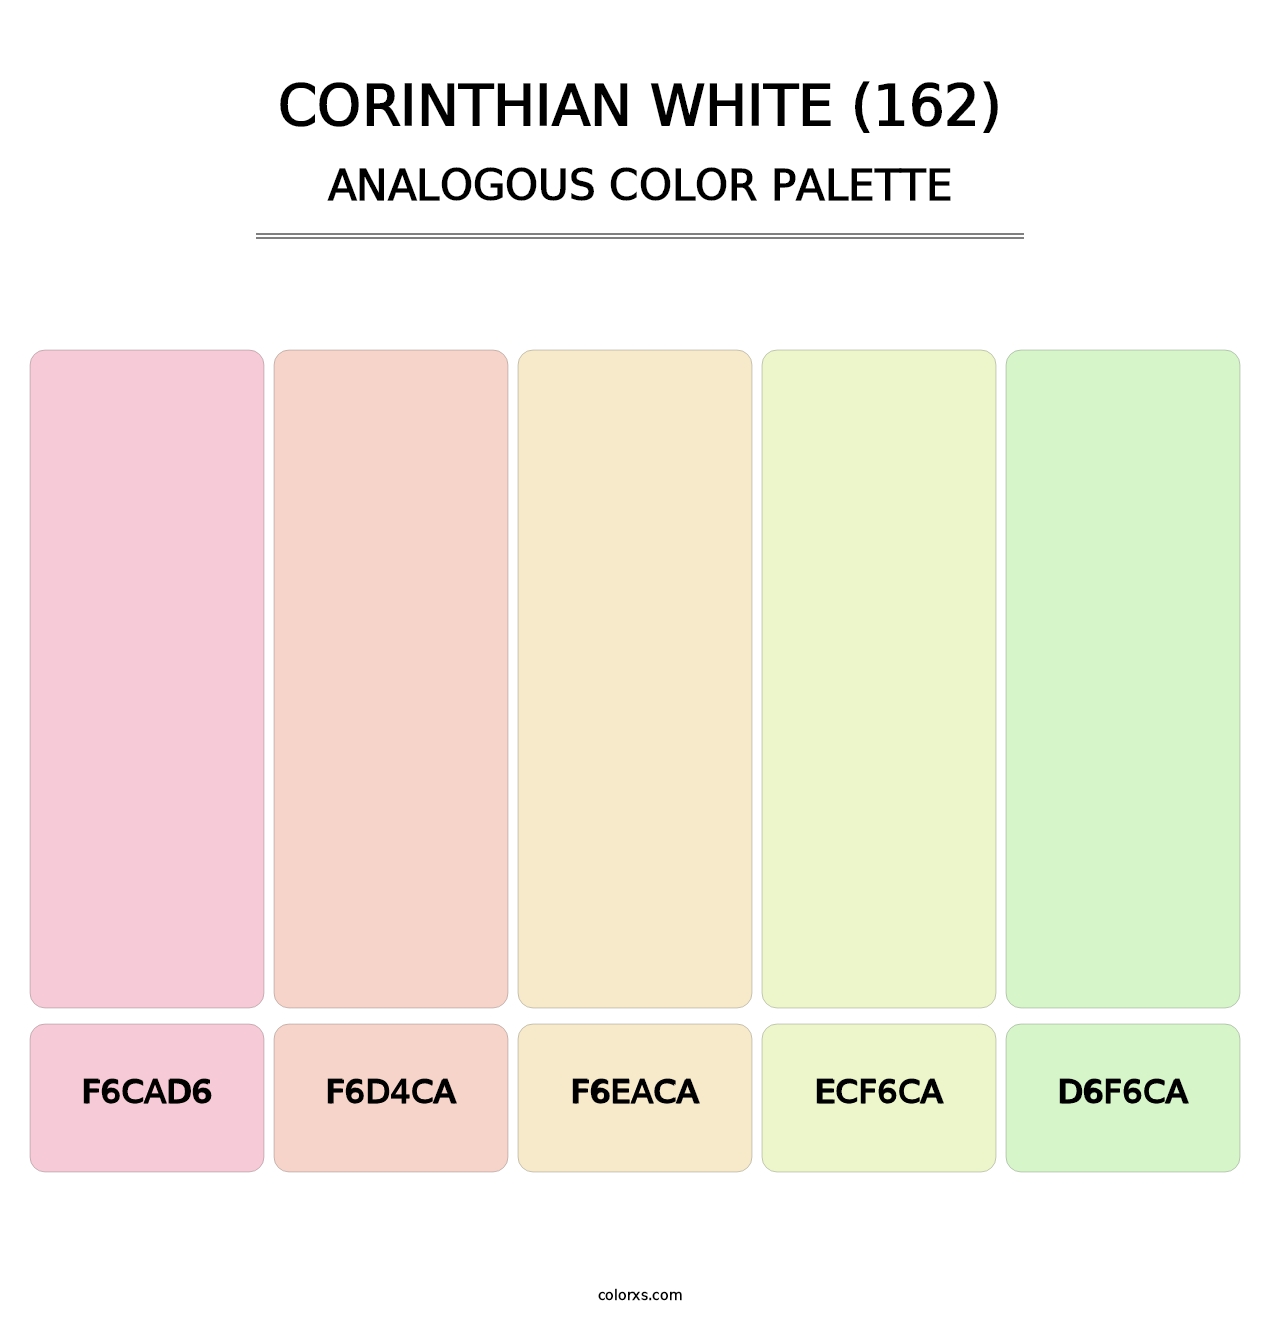 Corinthian White (162) - Analogous Color Palette